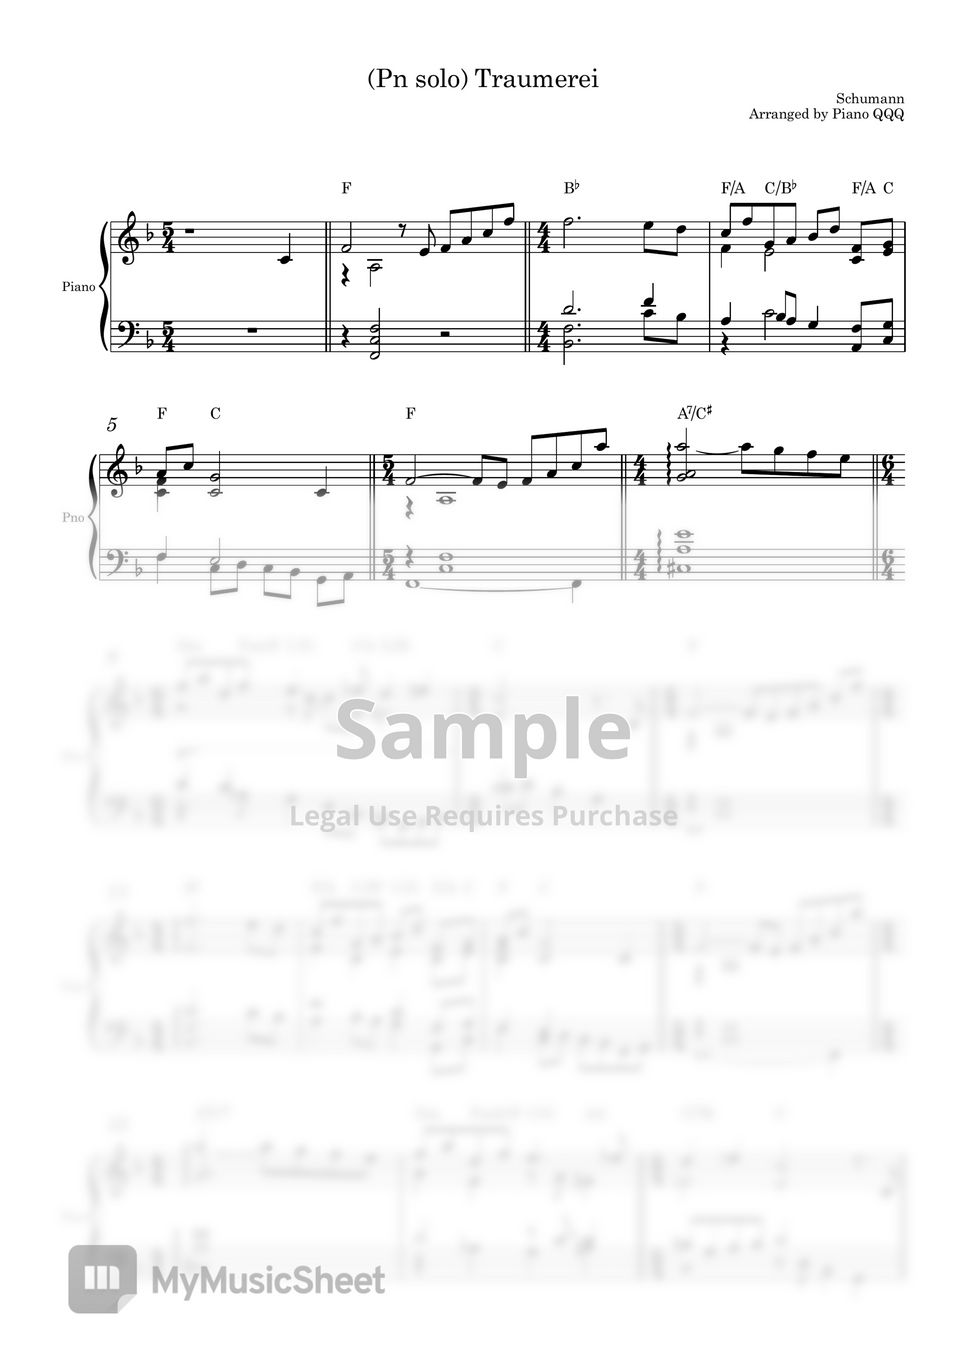 Schumann - Traumerei (Sheet music for piano solo) by Piano QQQ